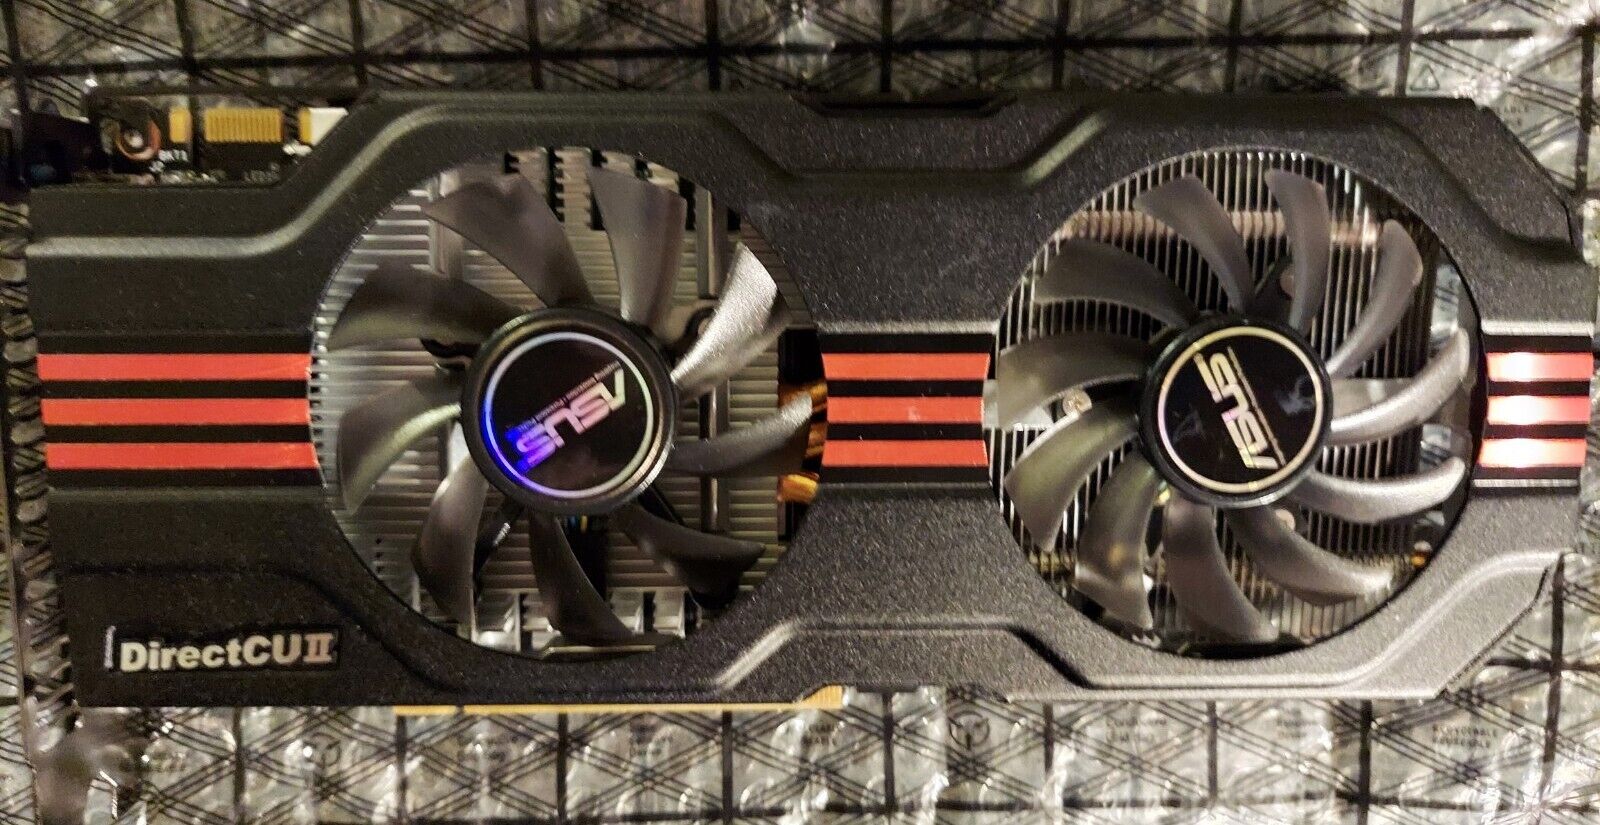 TESTED GOOD ASUS NVidia GeForce GTX 560Ti 1GB PCIe x16 Video Graphics Card GPU